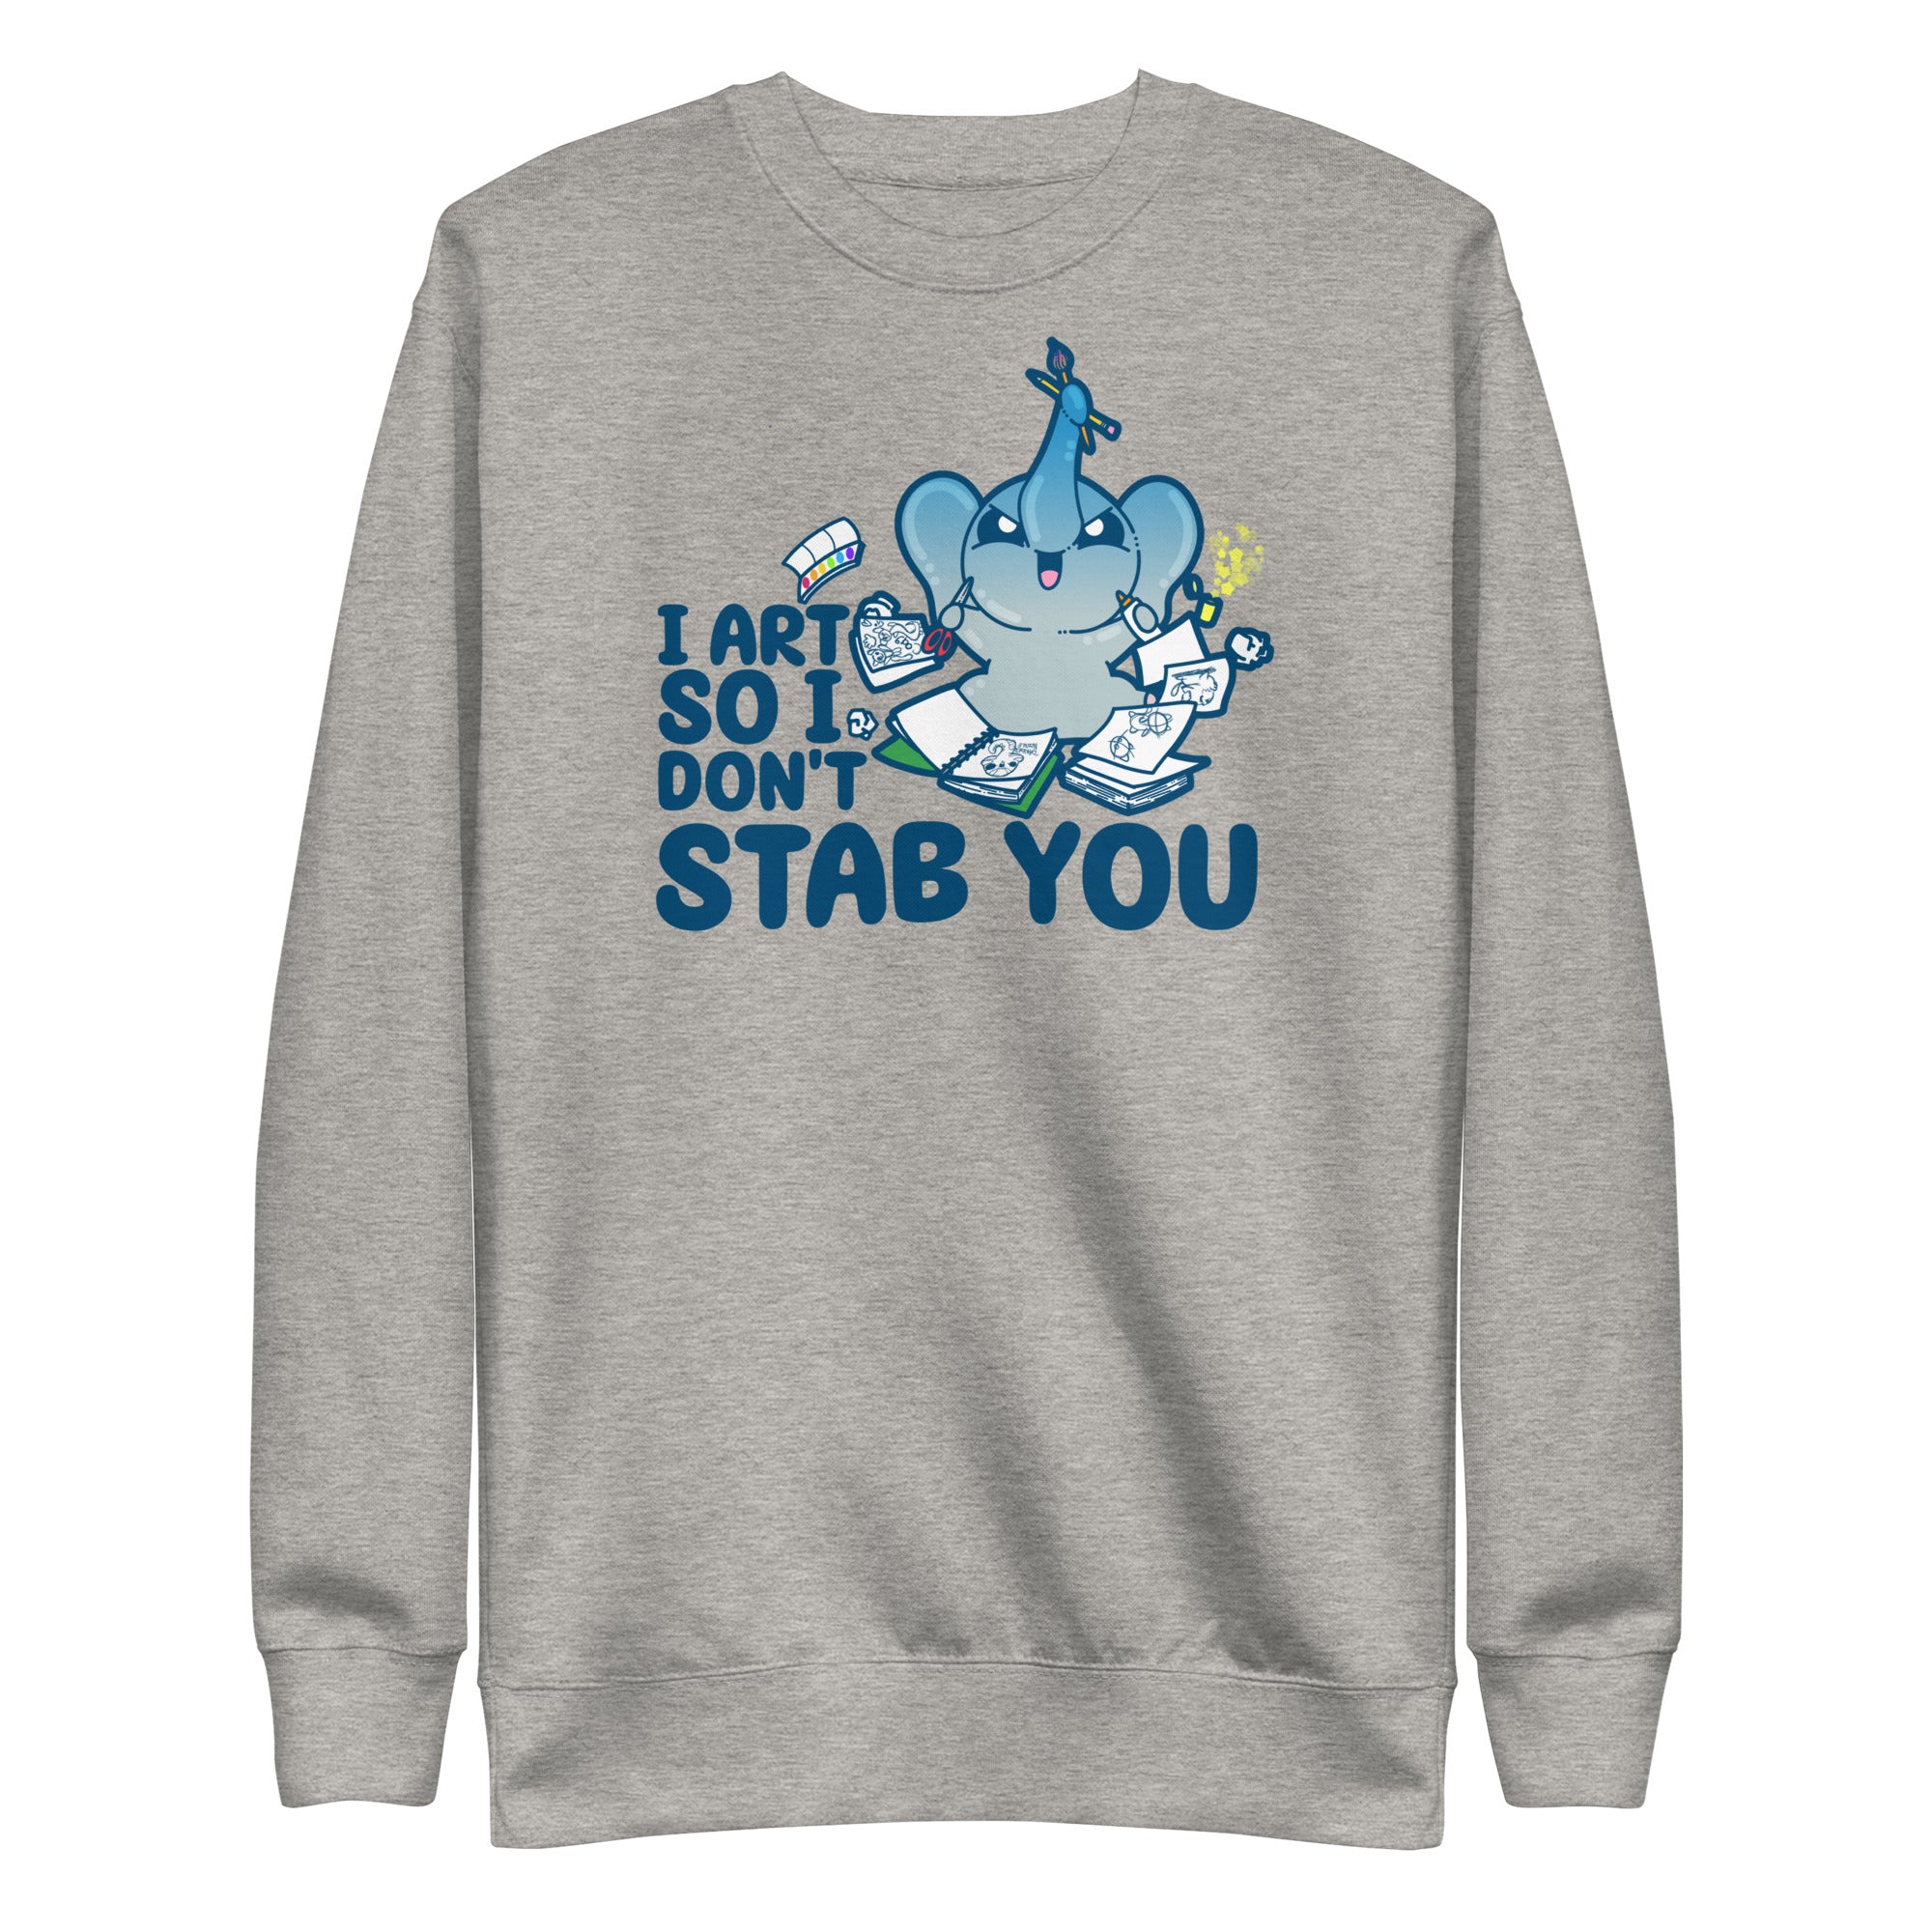 I ART SO I DONT STAB YOU - Premium Sweatshirt